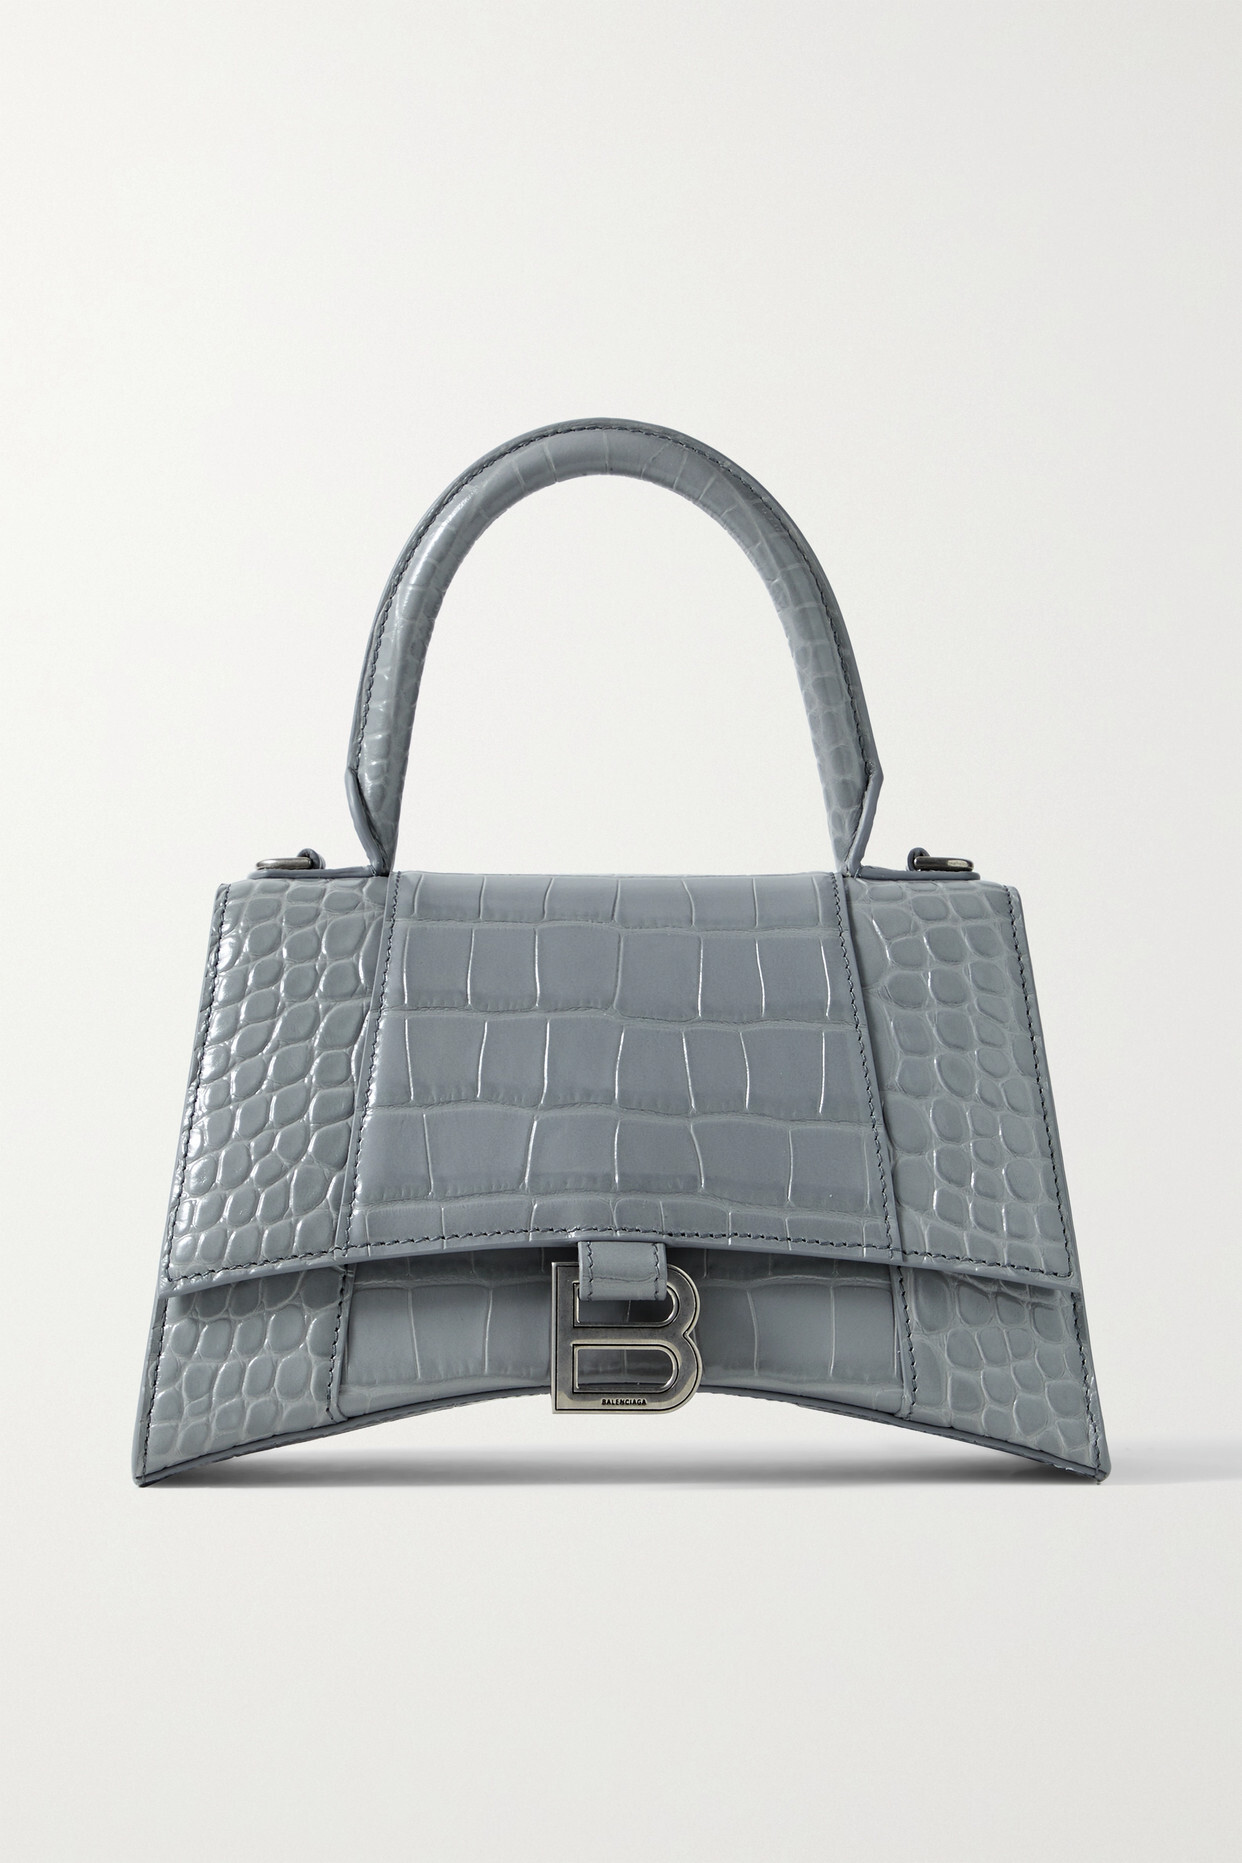 Balenciaga - Hourglass Small Croc-effect Leather Tote - Gray